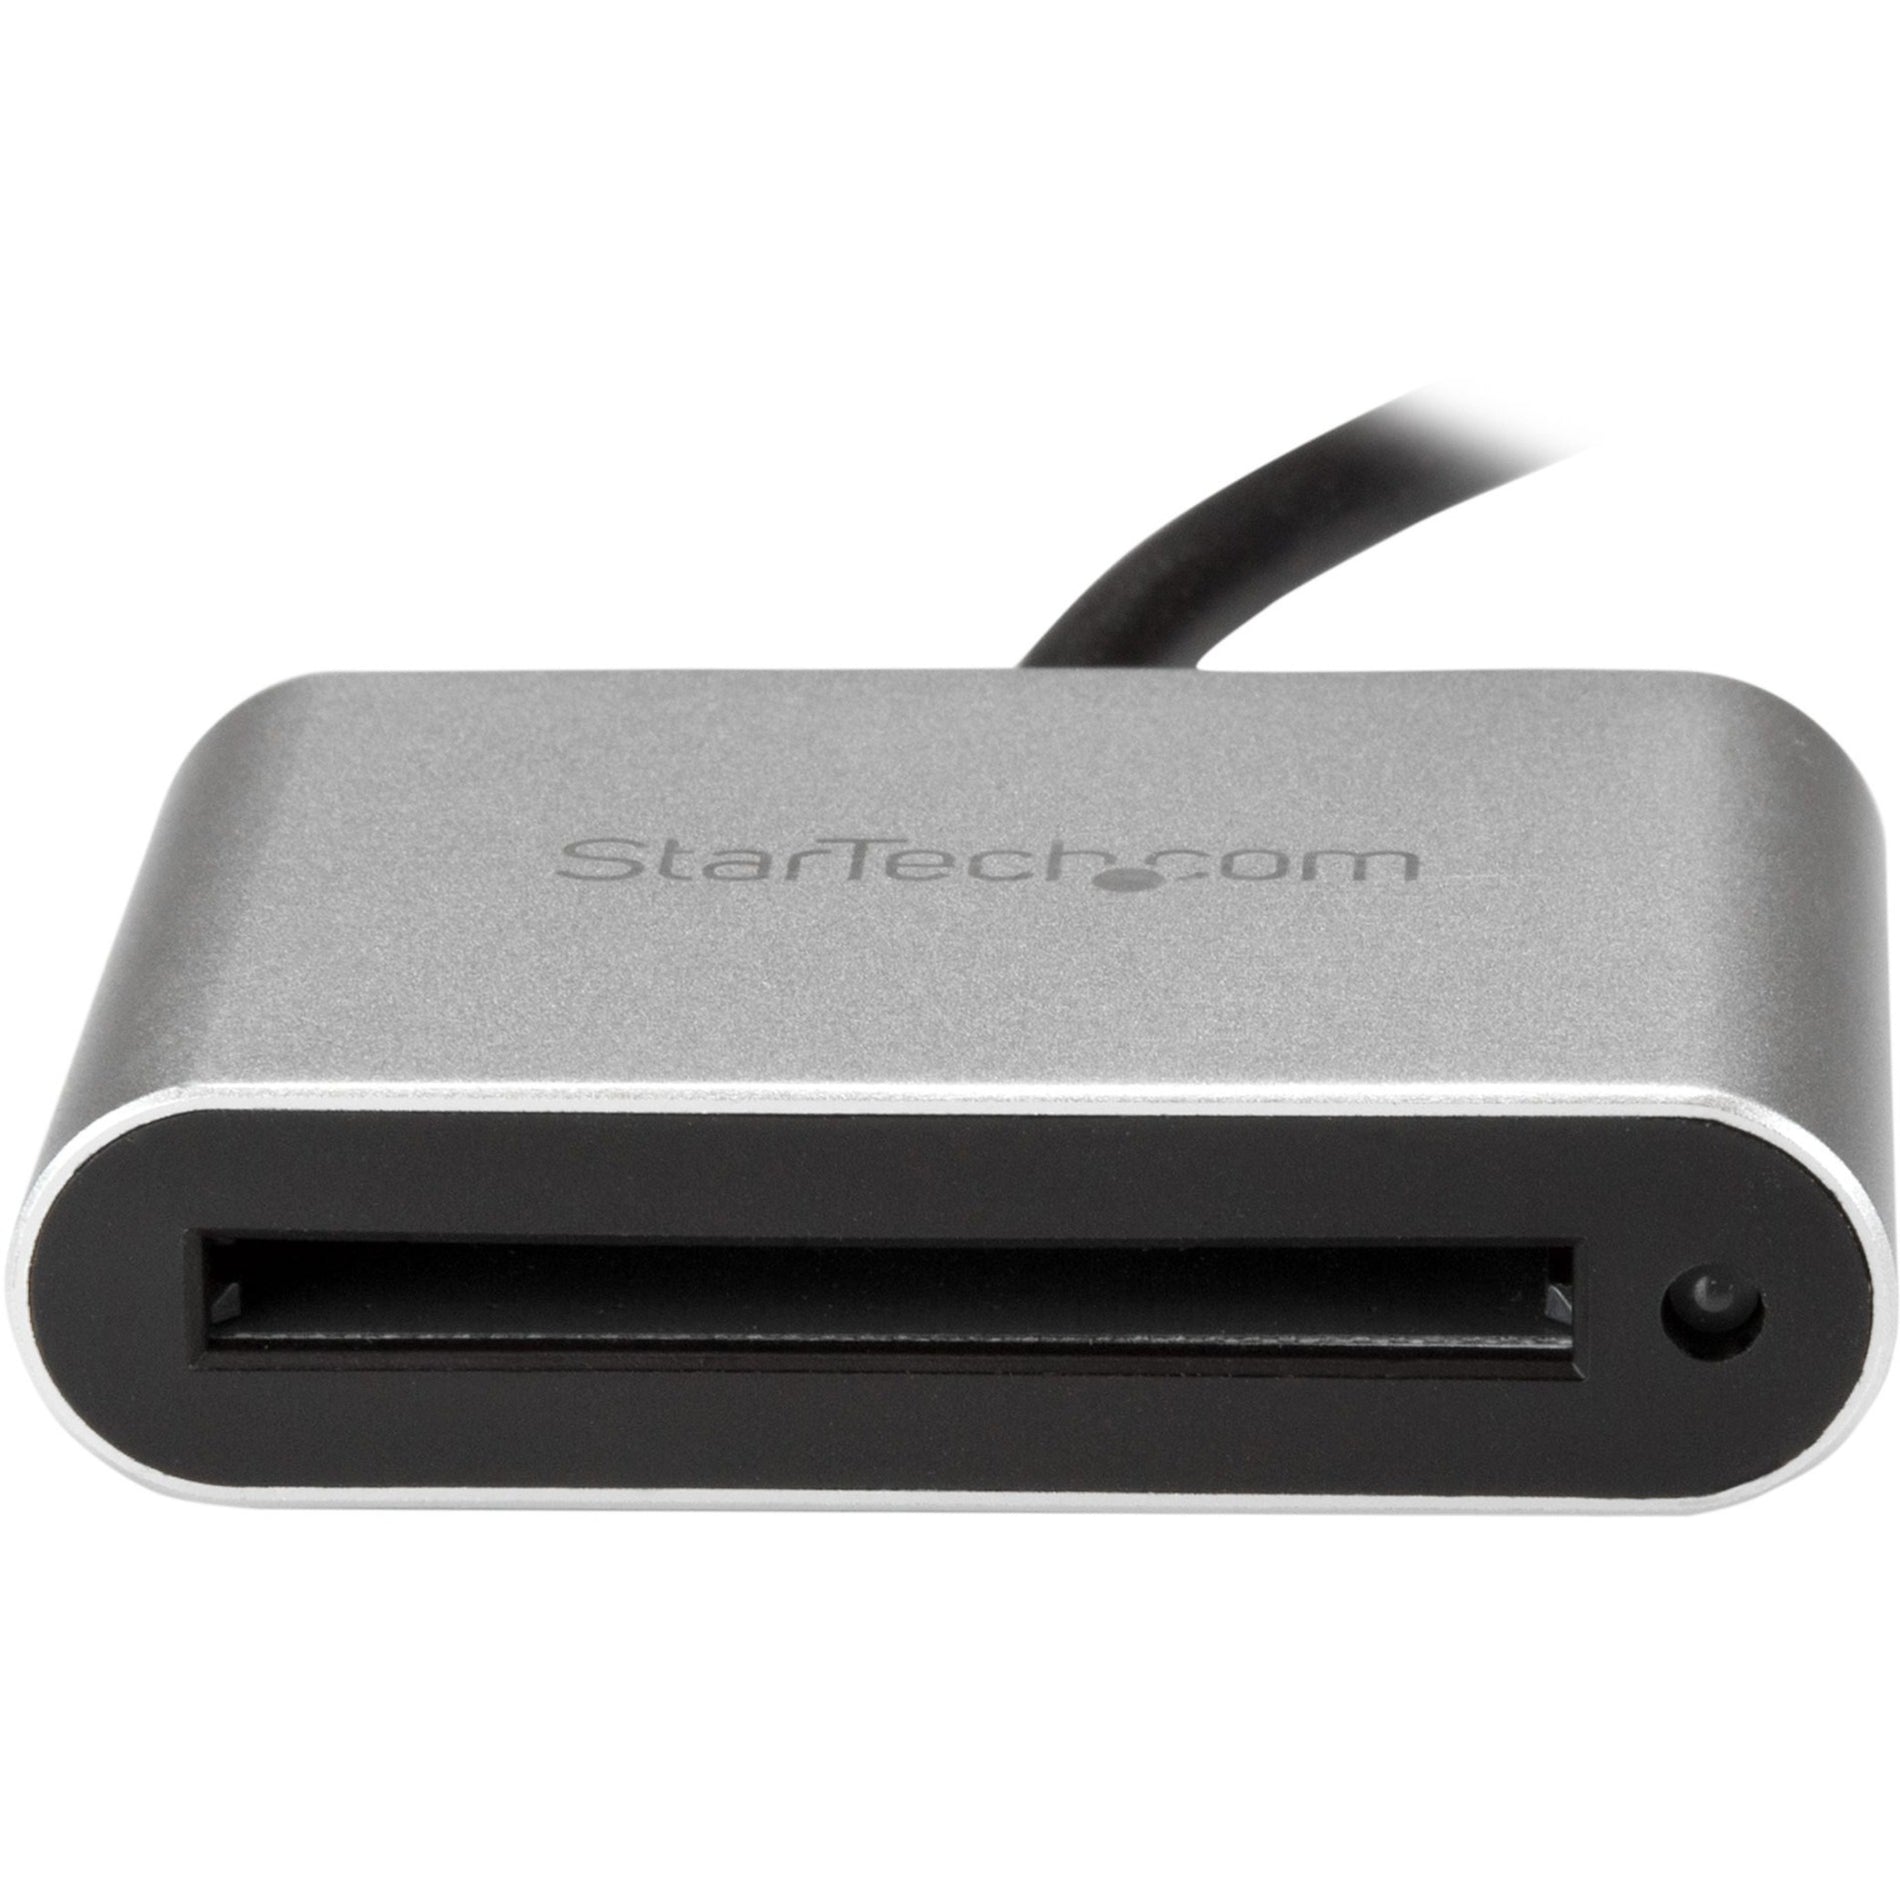 StarTech.com CFASTRWU3 CFast 2.0 Card Reader / Writer - USB 3.0, Portable CFast Reader for Memory Cards - USB Powered